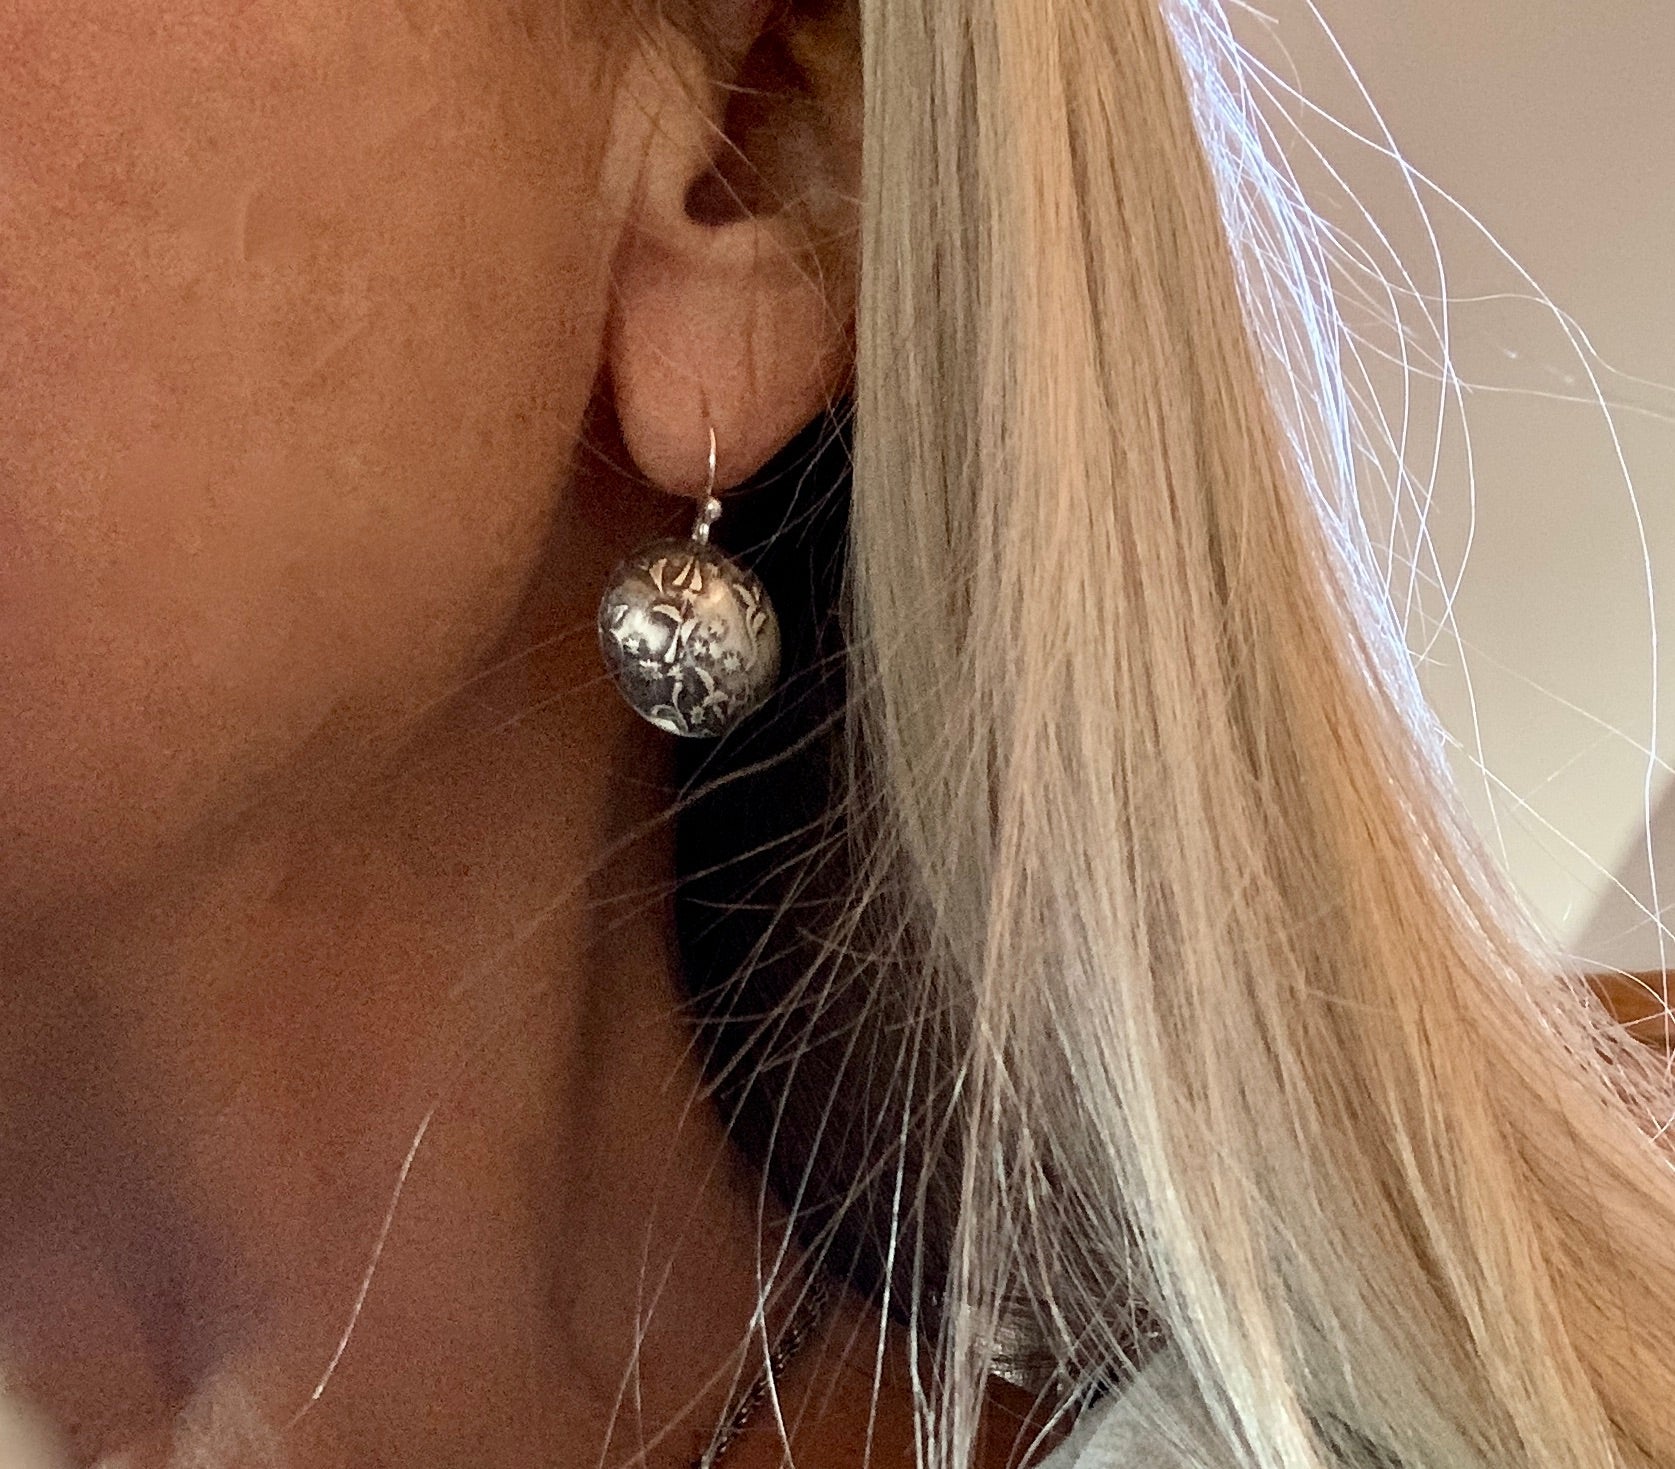 Wildflower Silver Earrings - Evitts Creek Arts